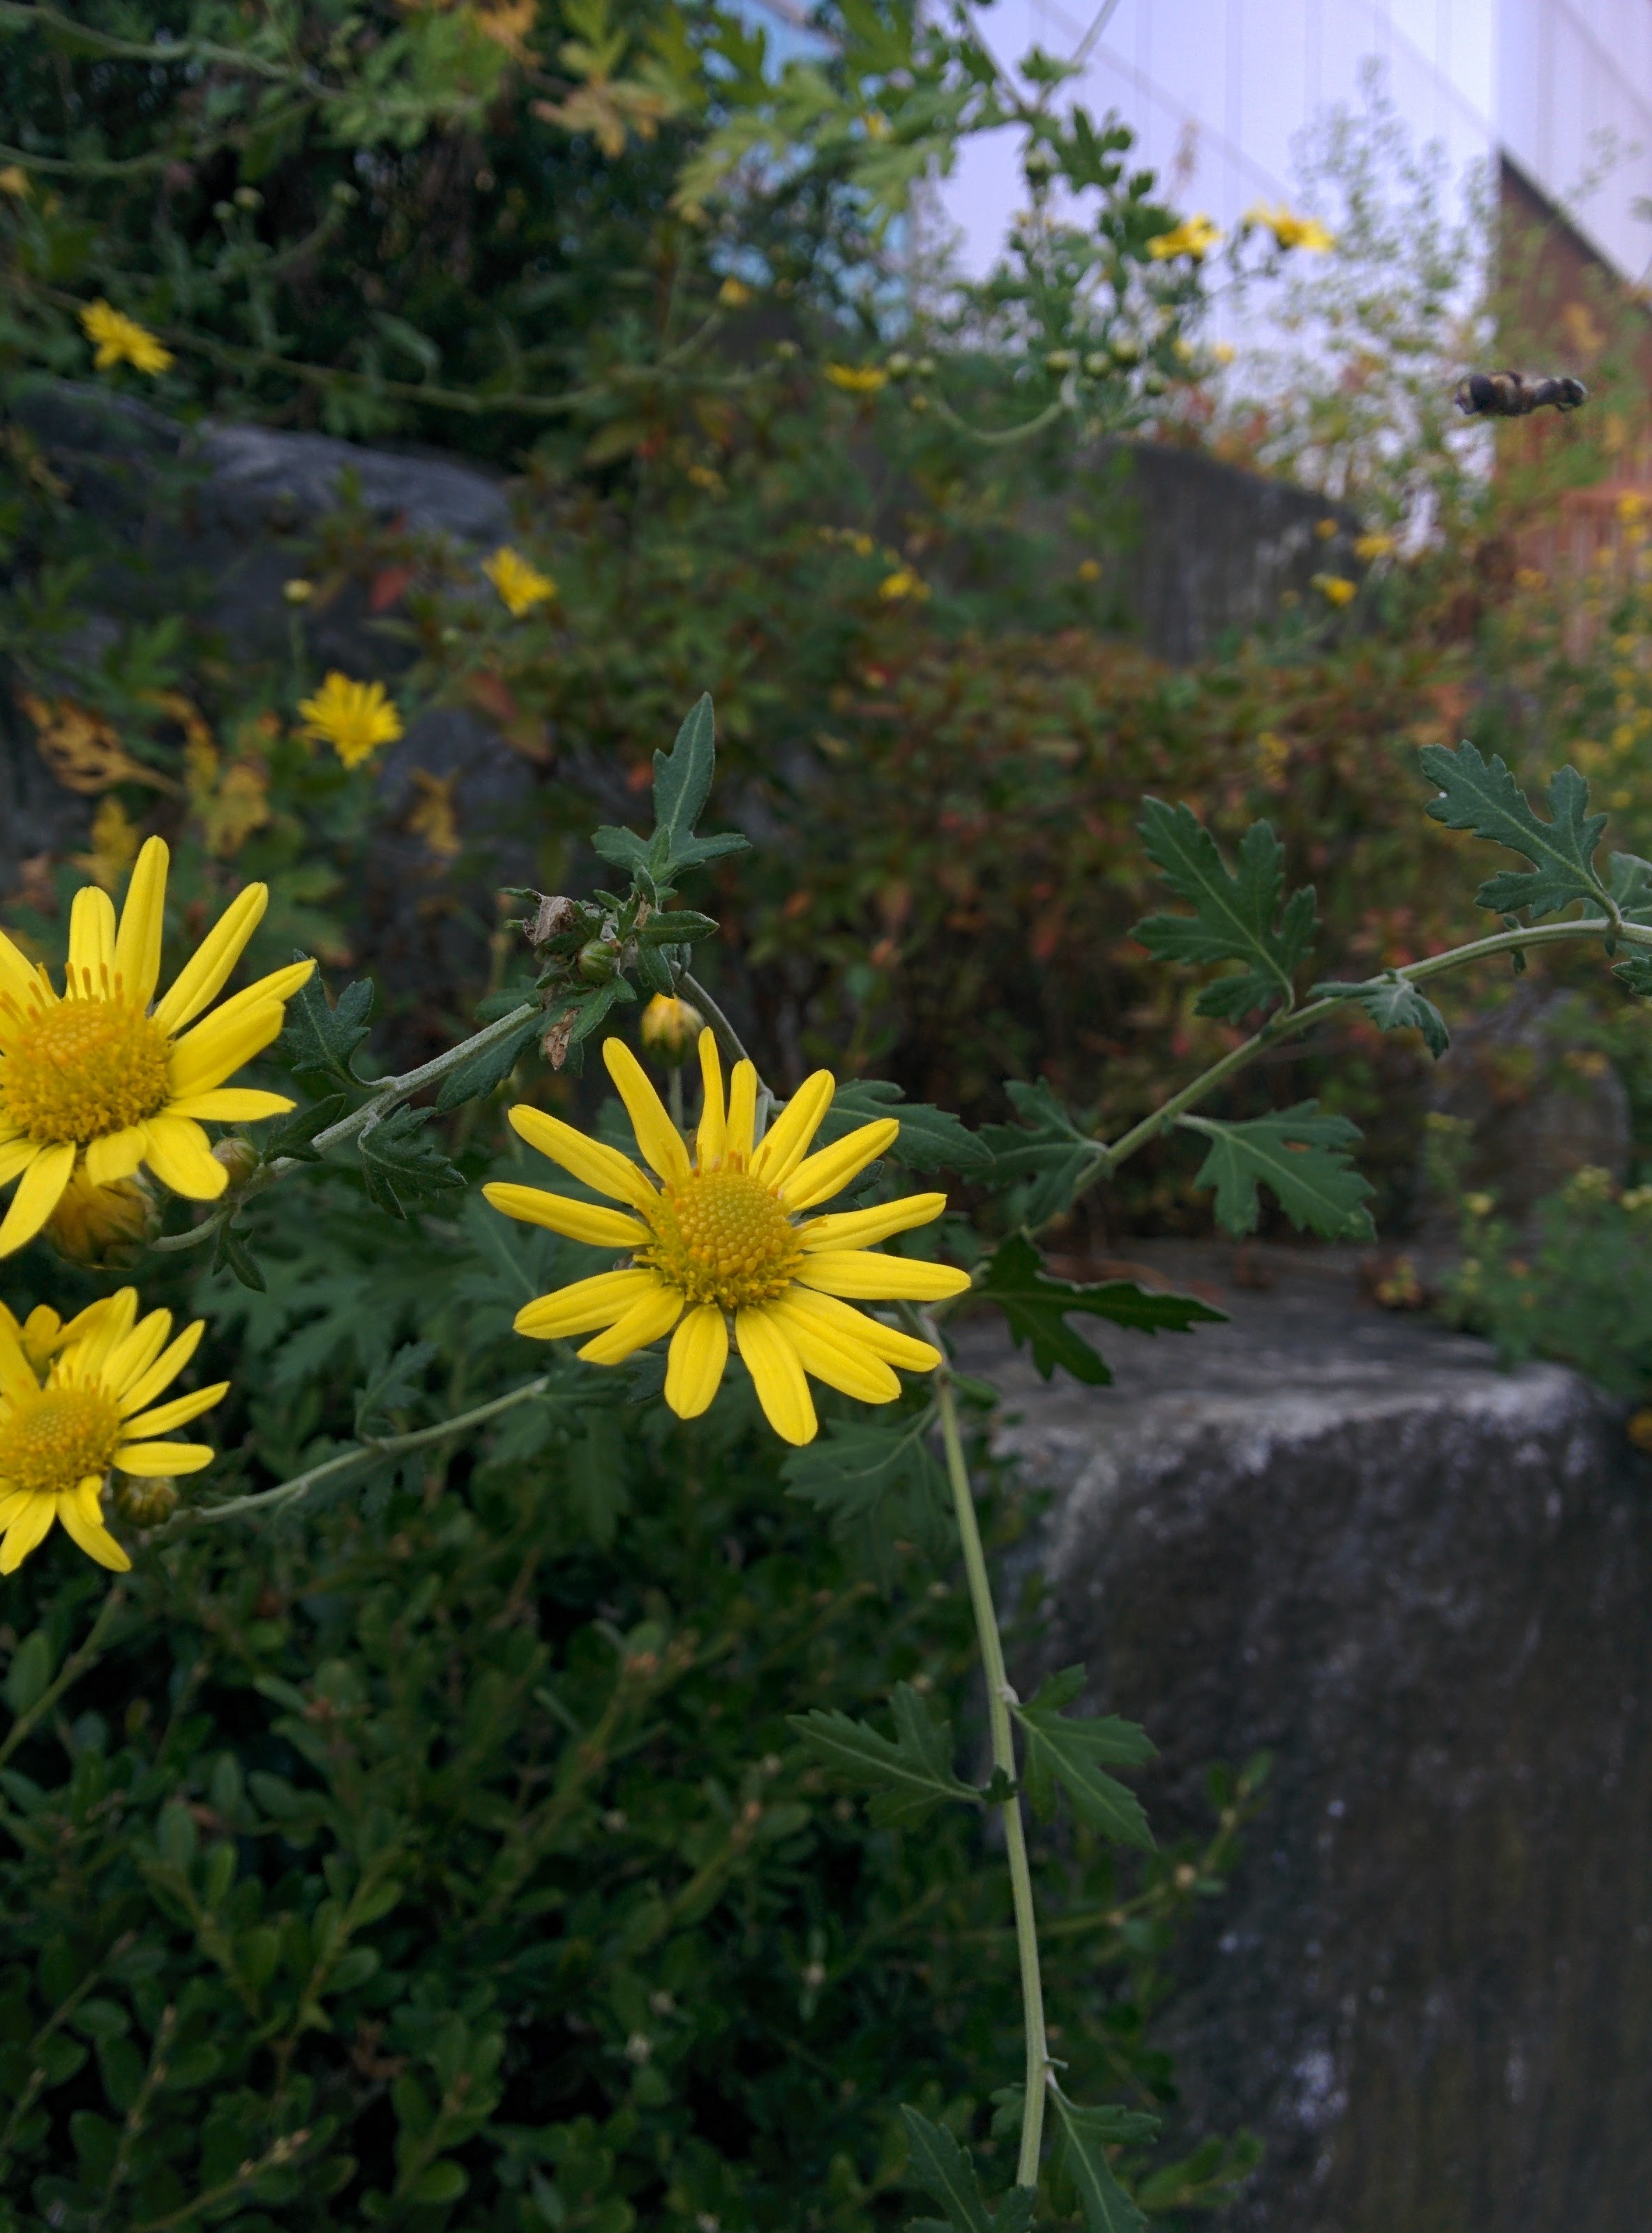 IMG_20151014_122142.jpg 노란색 들국화 꽃(감국)을 찾은 굵은 다리 꽃벌류 -- 알통다리꽃등에